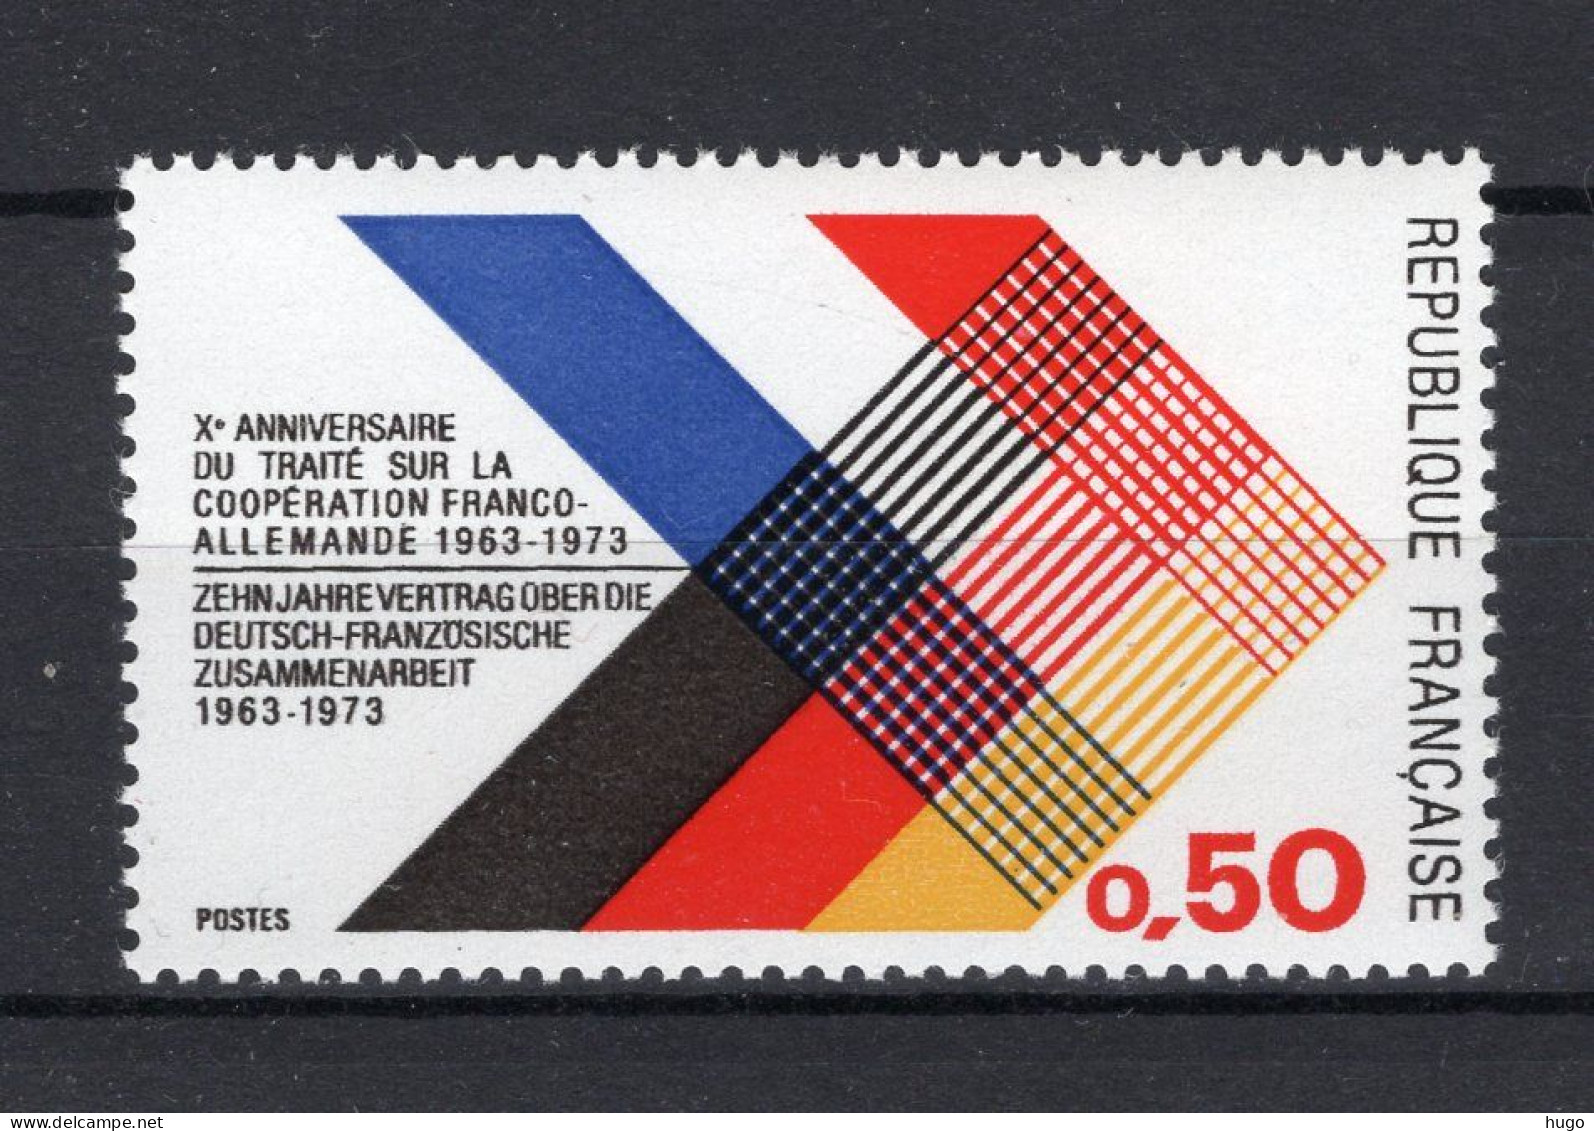 FRANKRIJK Yt. 1739 MNH 1973 - Unused Stamps